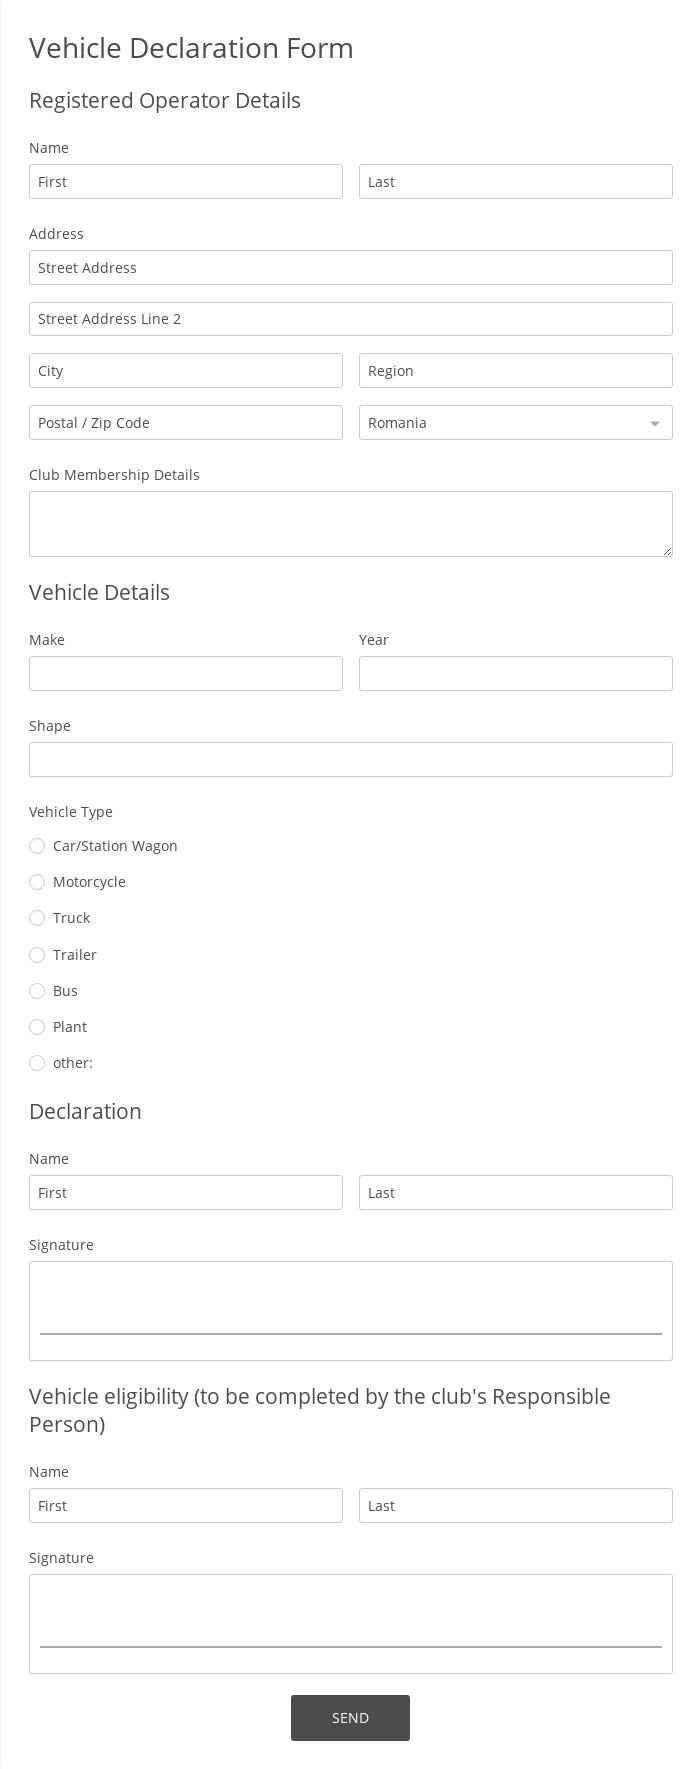 Vehicle Declaration Form